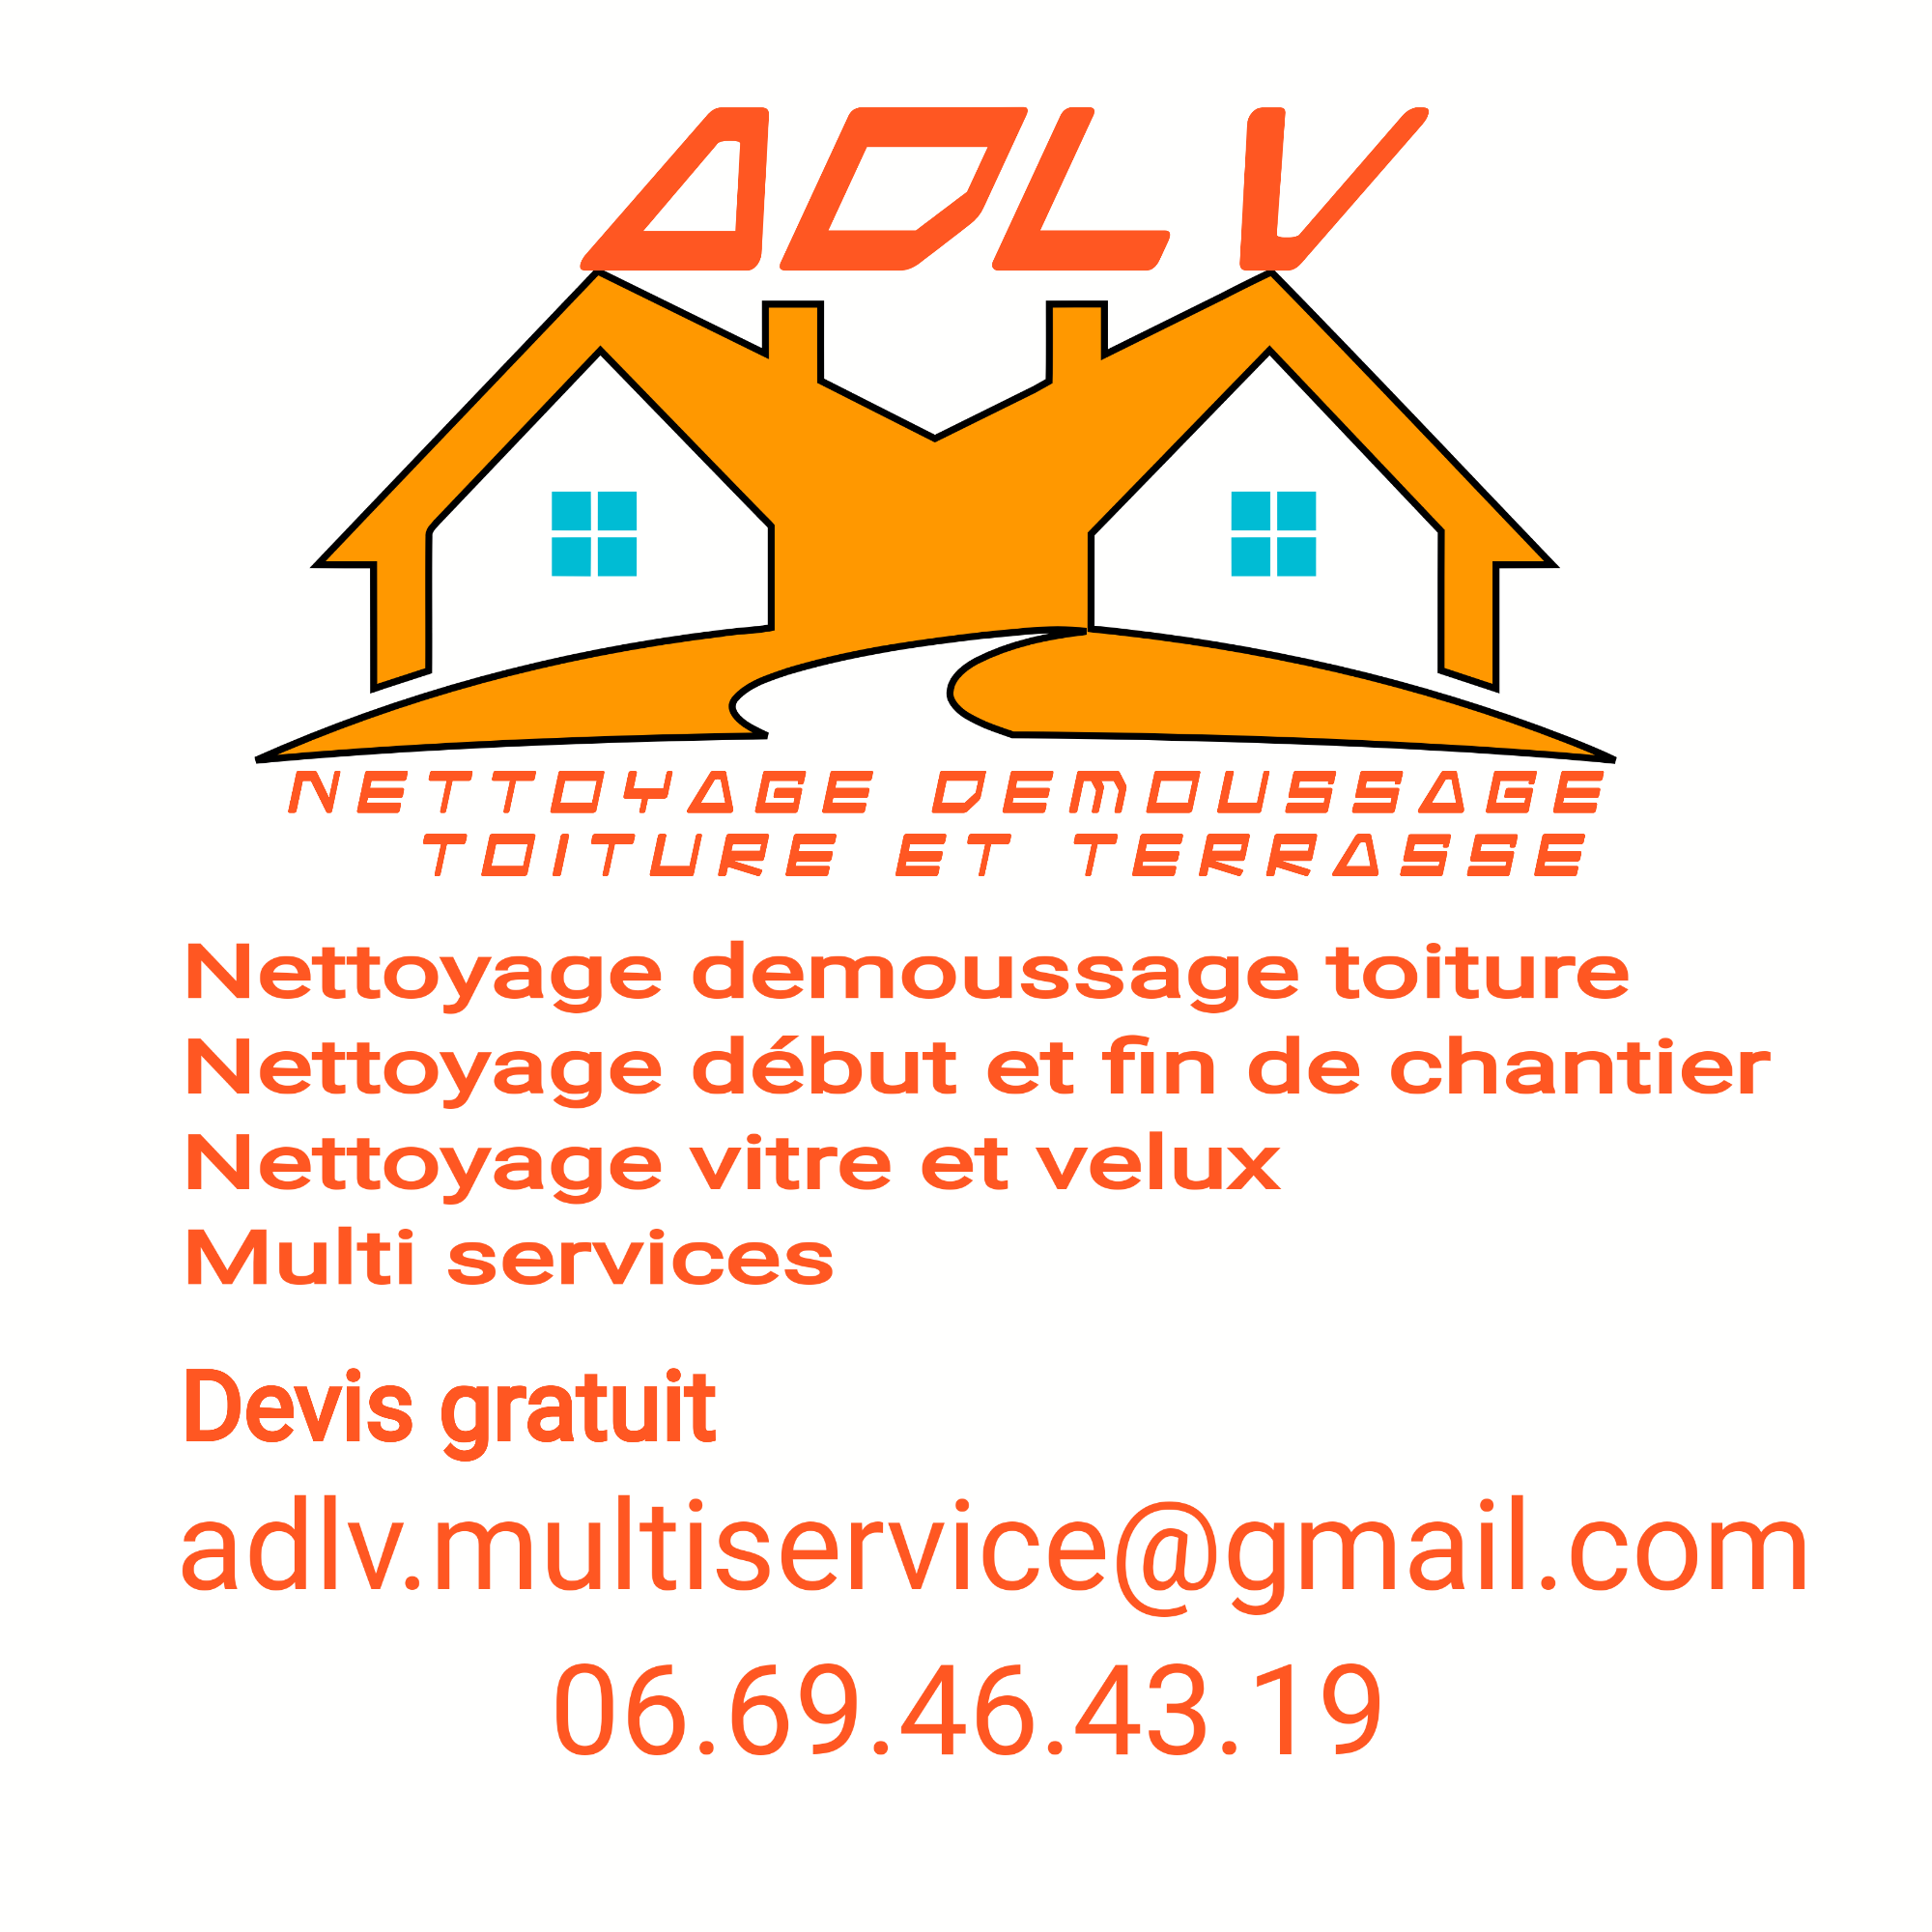 ADLV nettoyage demoussage toiture et terrasse